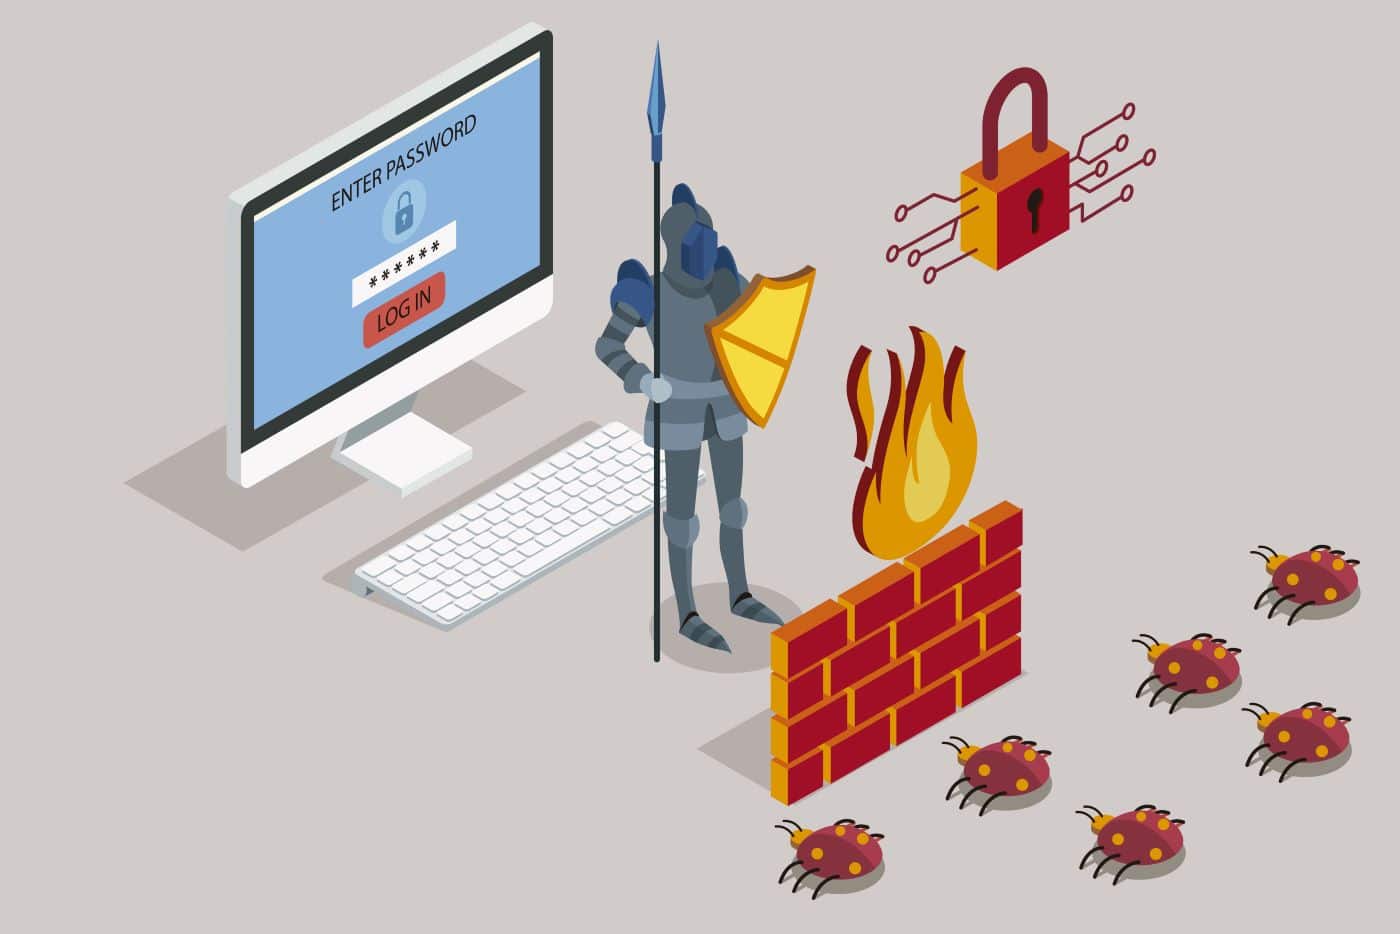 A firewall guarding a computer from viruses.